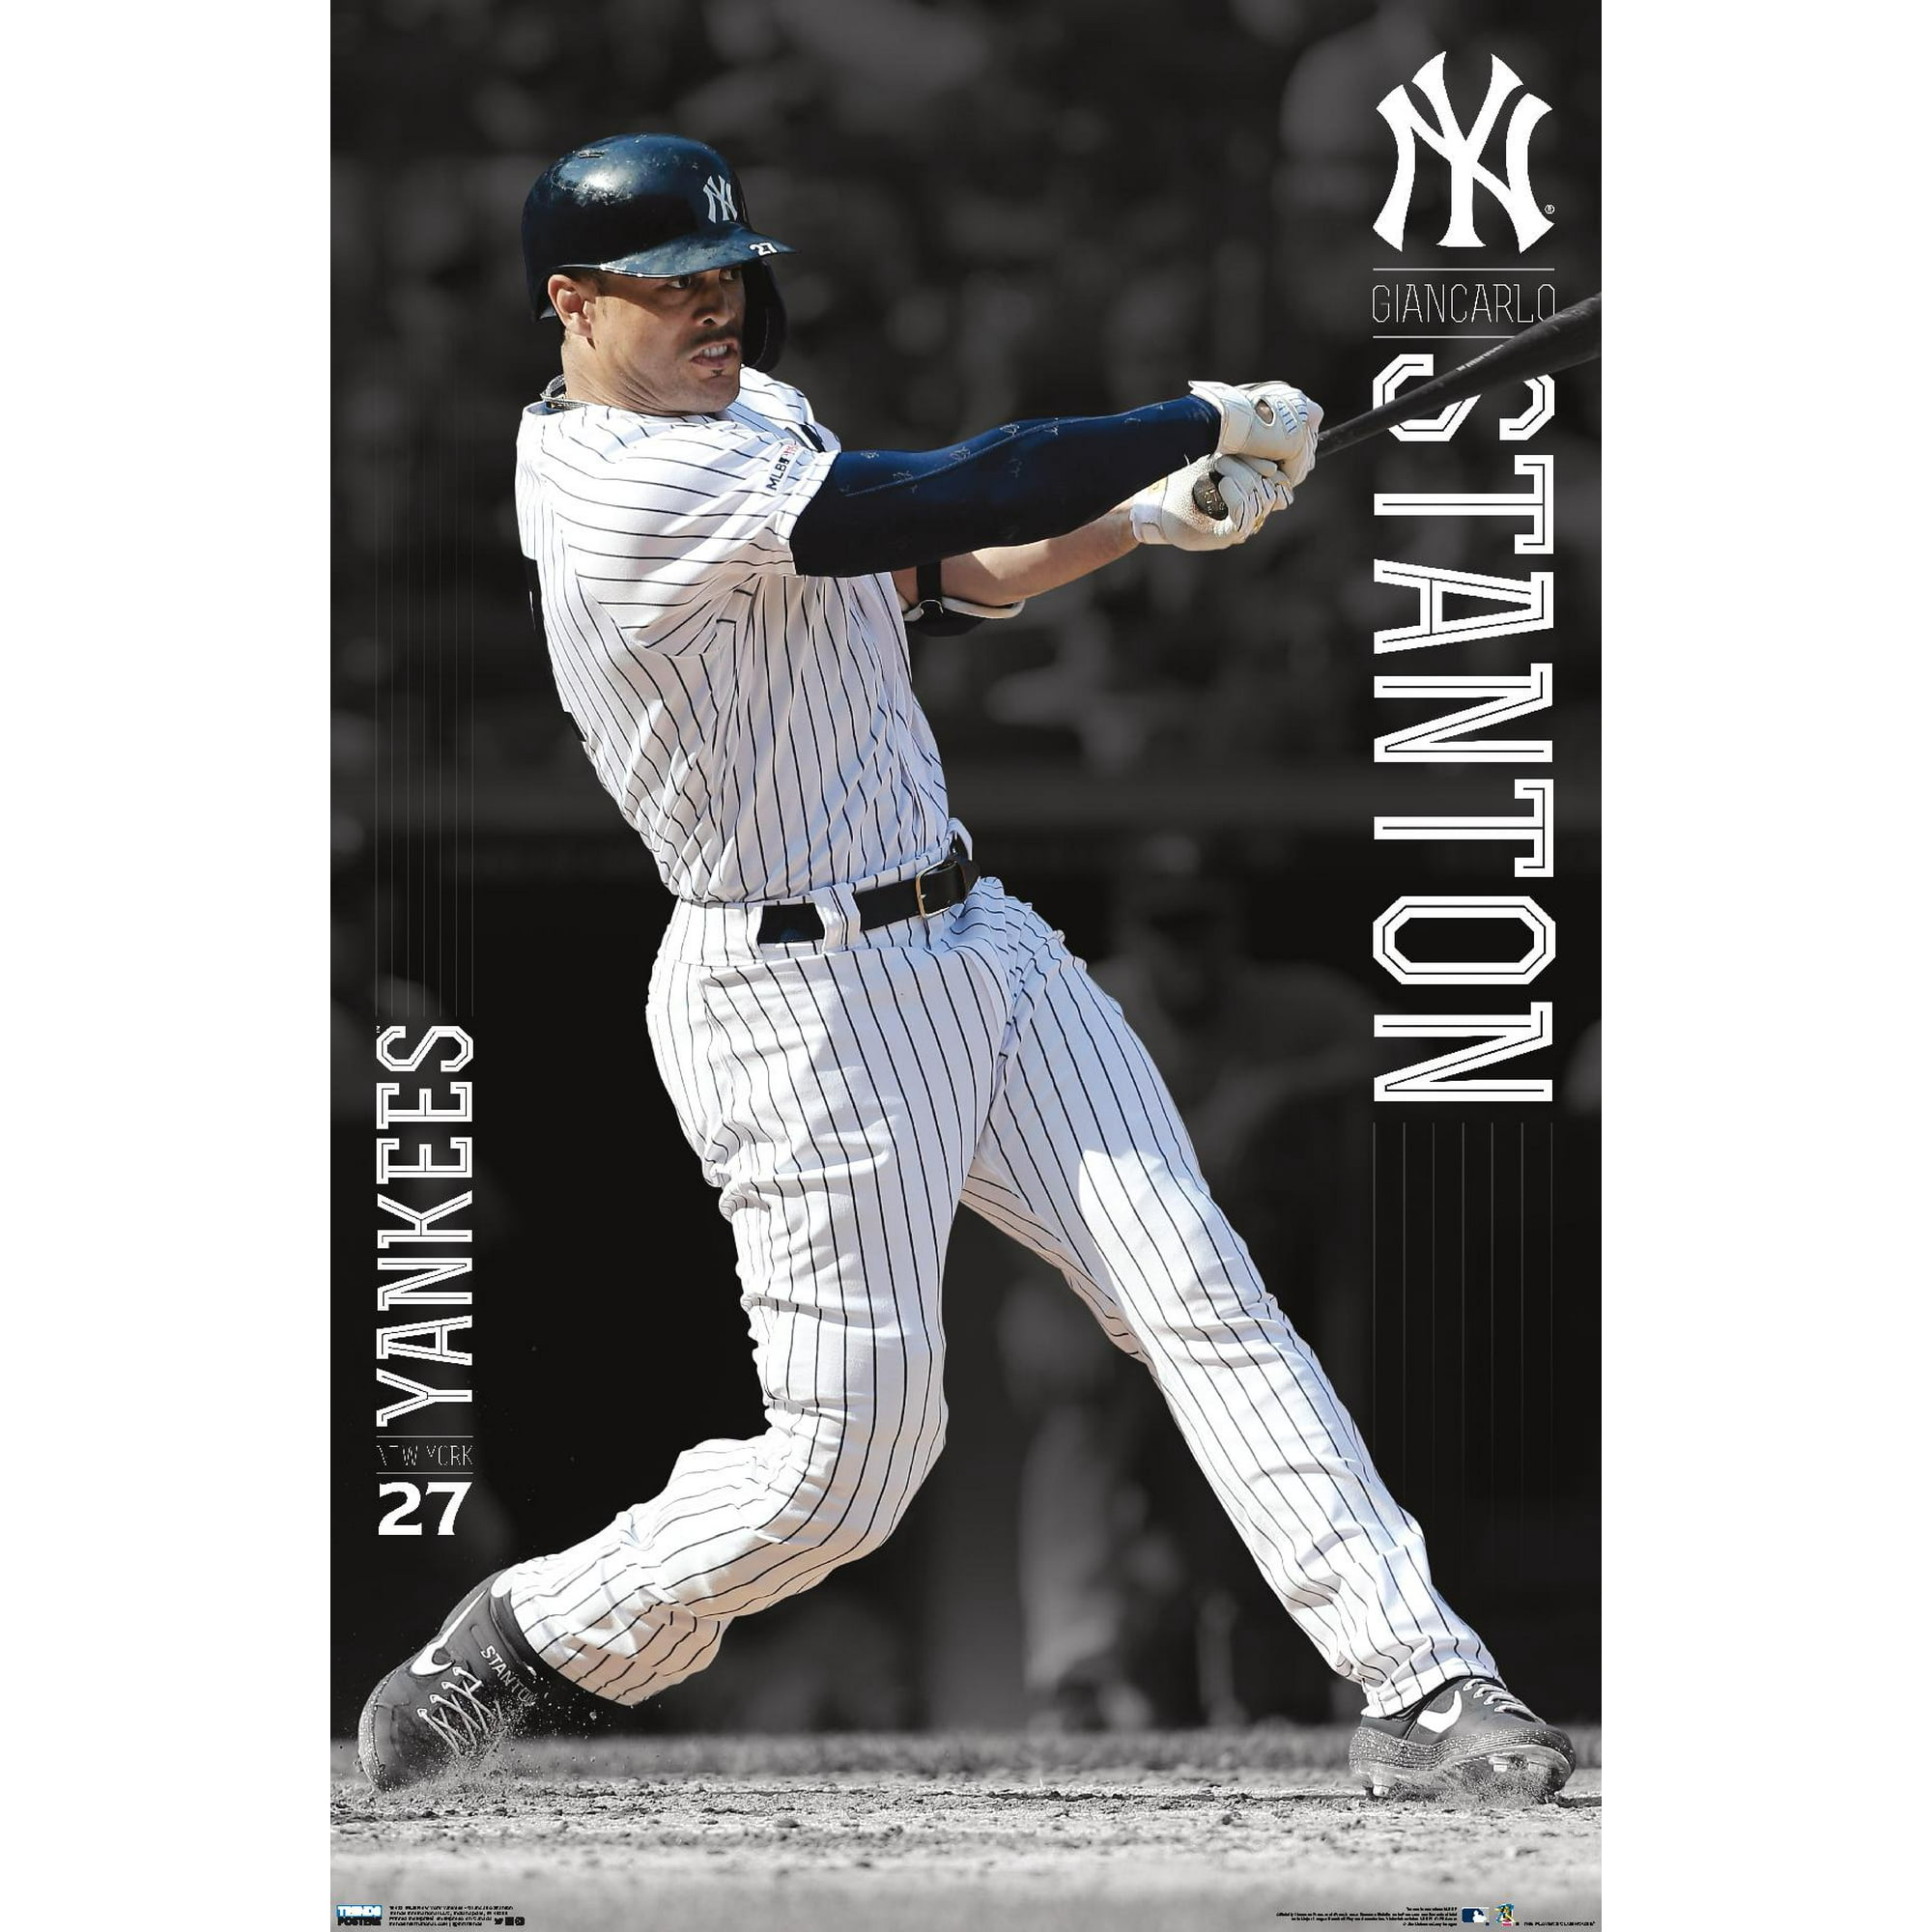 MLB New York Yankees - Giancarlo Stanton 20 Wall Poster, 22.375 x 34 